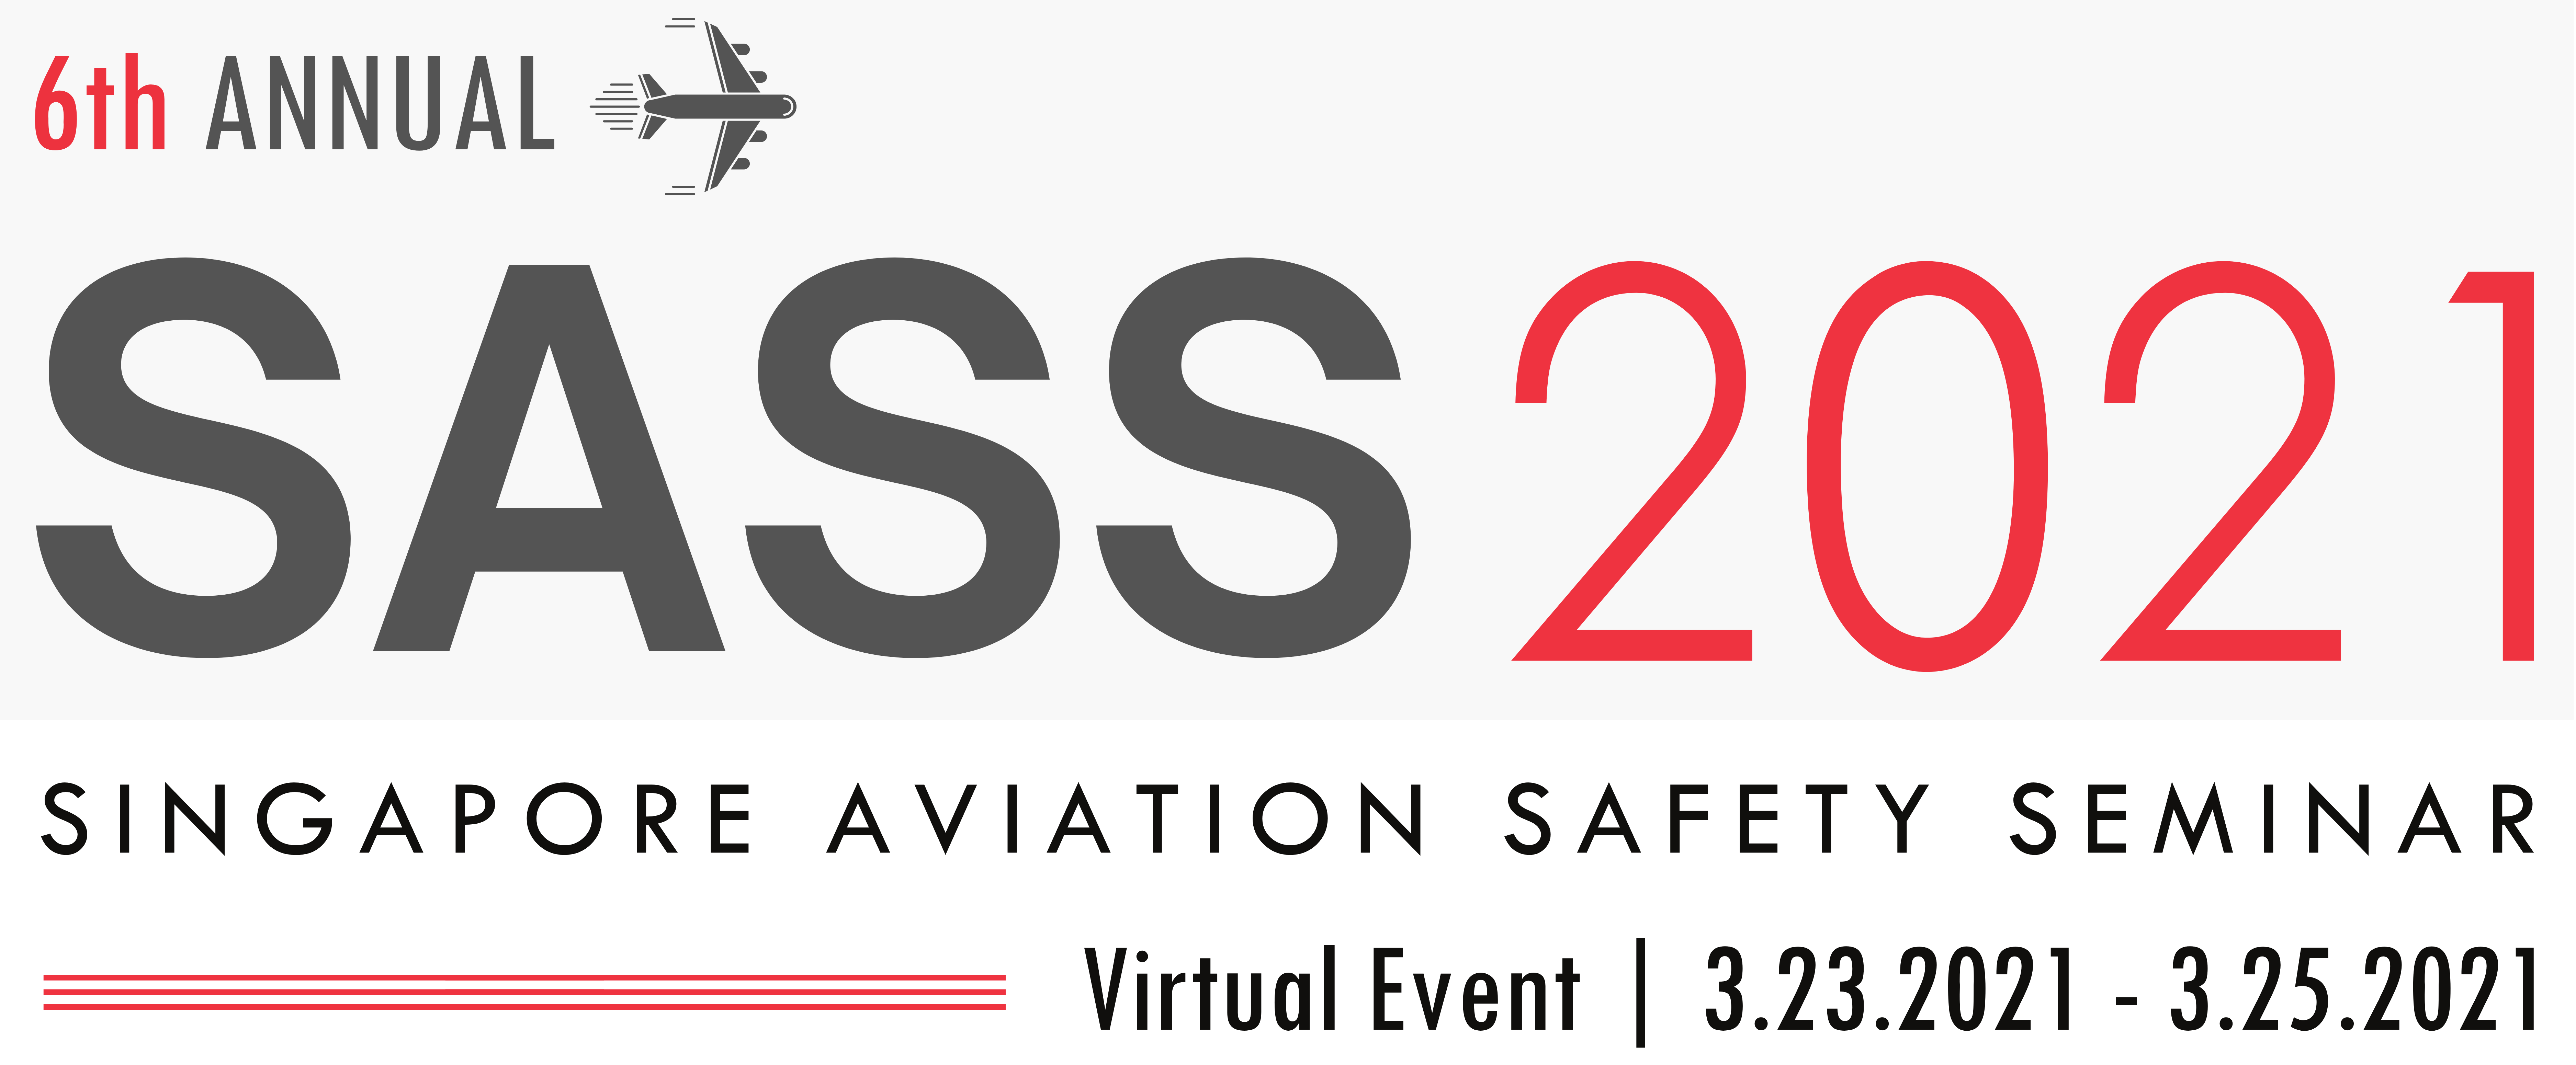 Singapore Aviation Safety Seminar